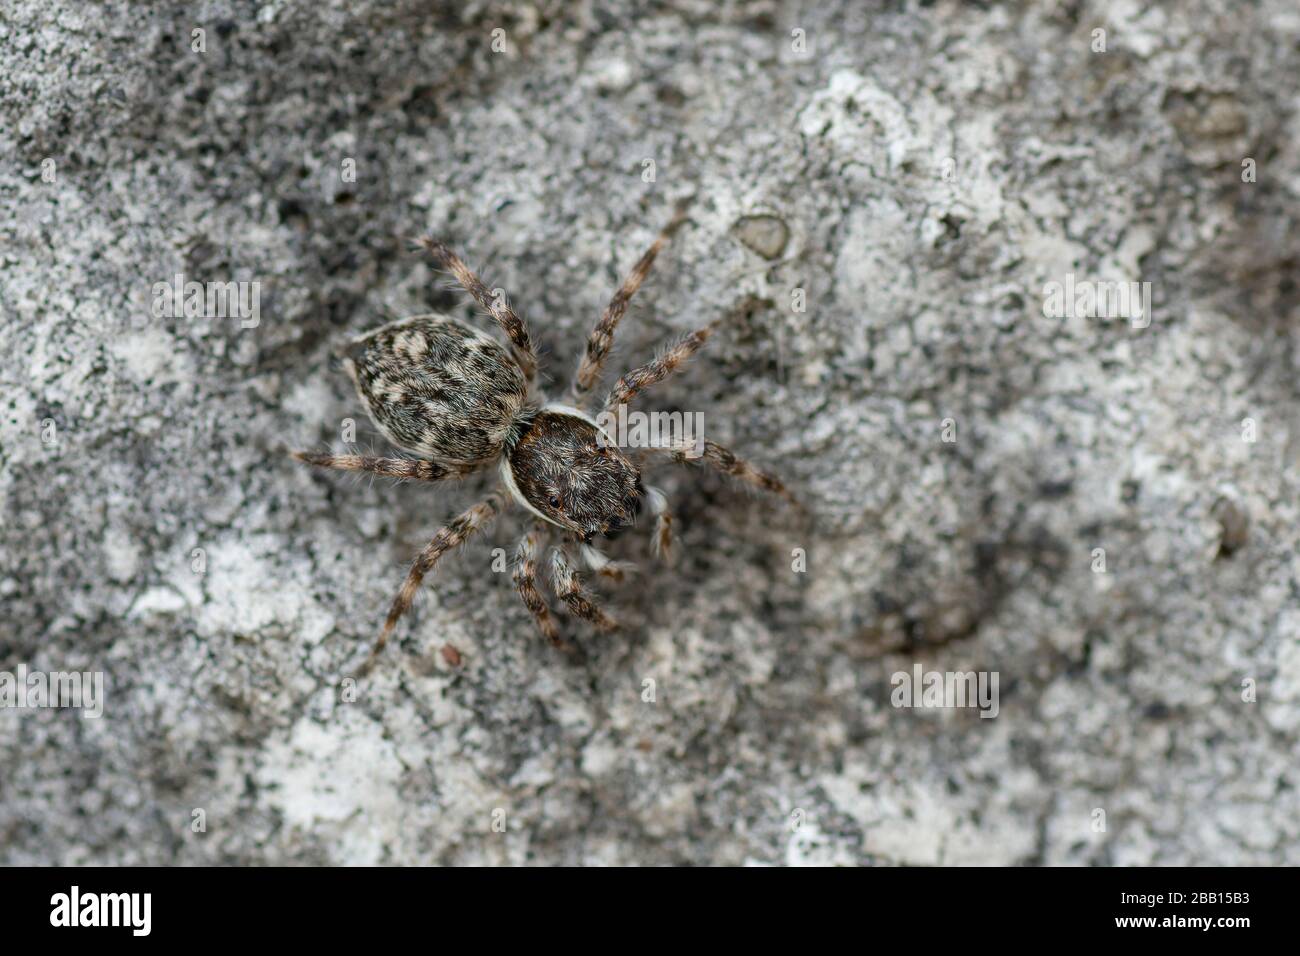 spider guardando o preda su un muro in un ambiente urbano Foto Stock